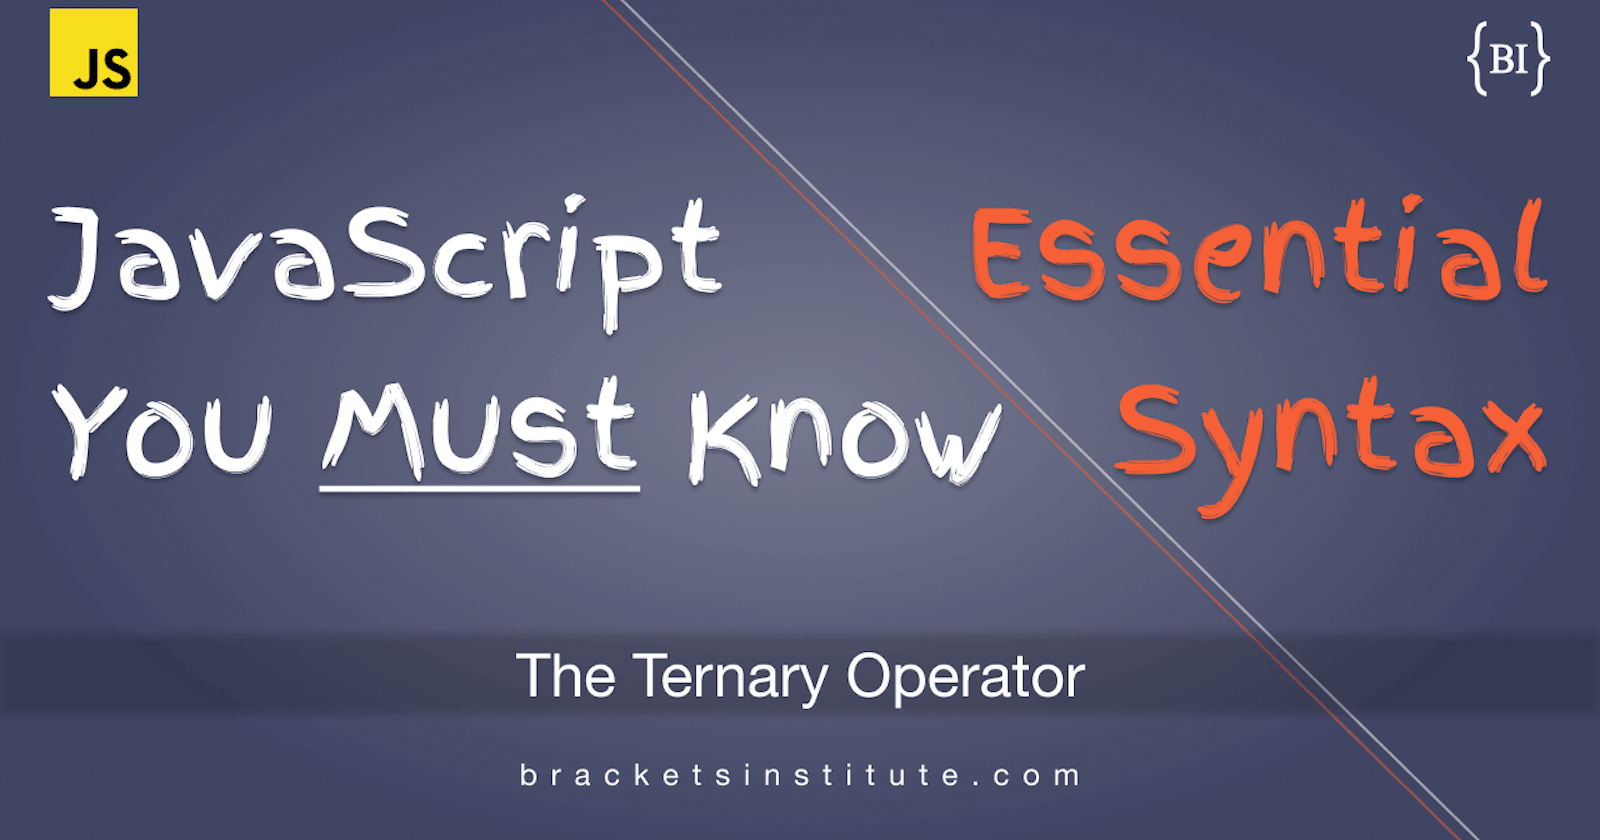 The Ternary Operator